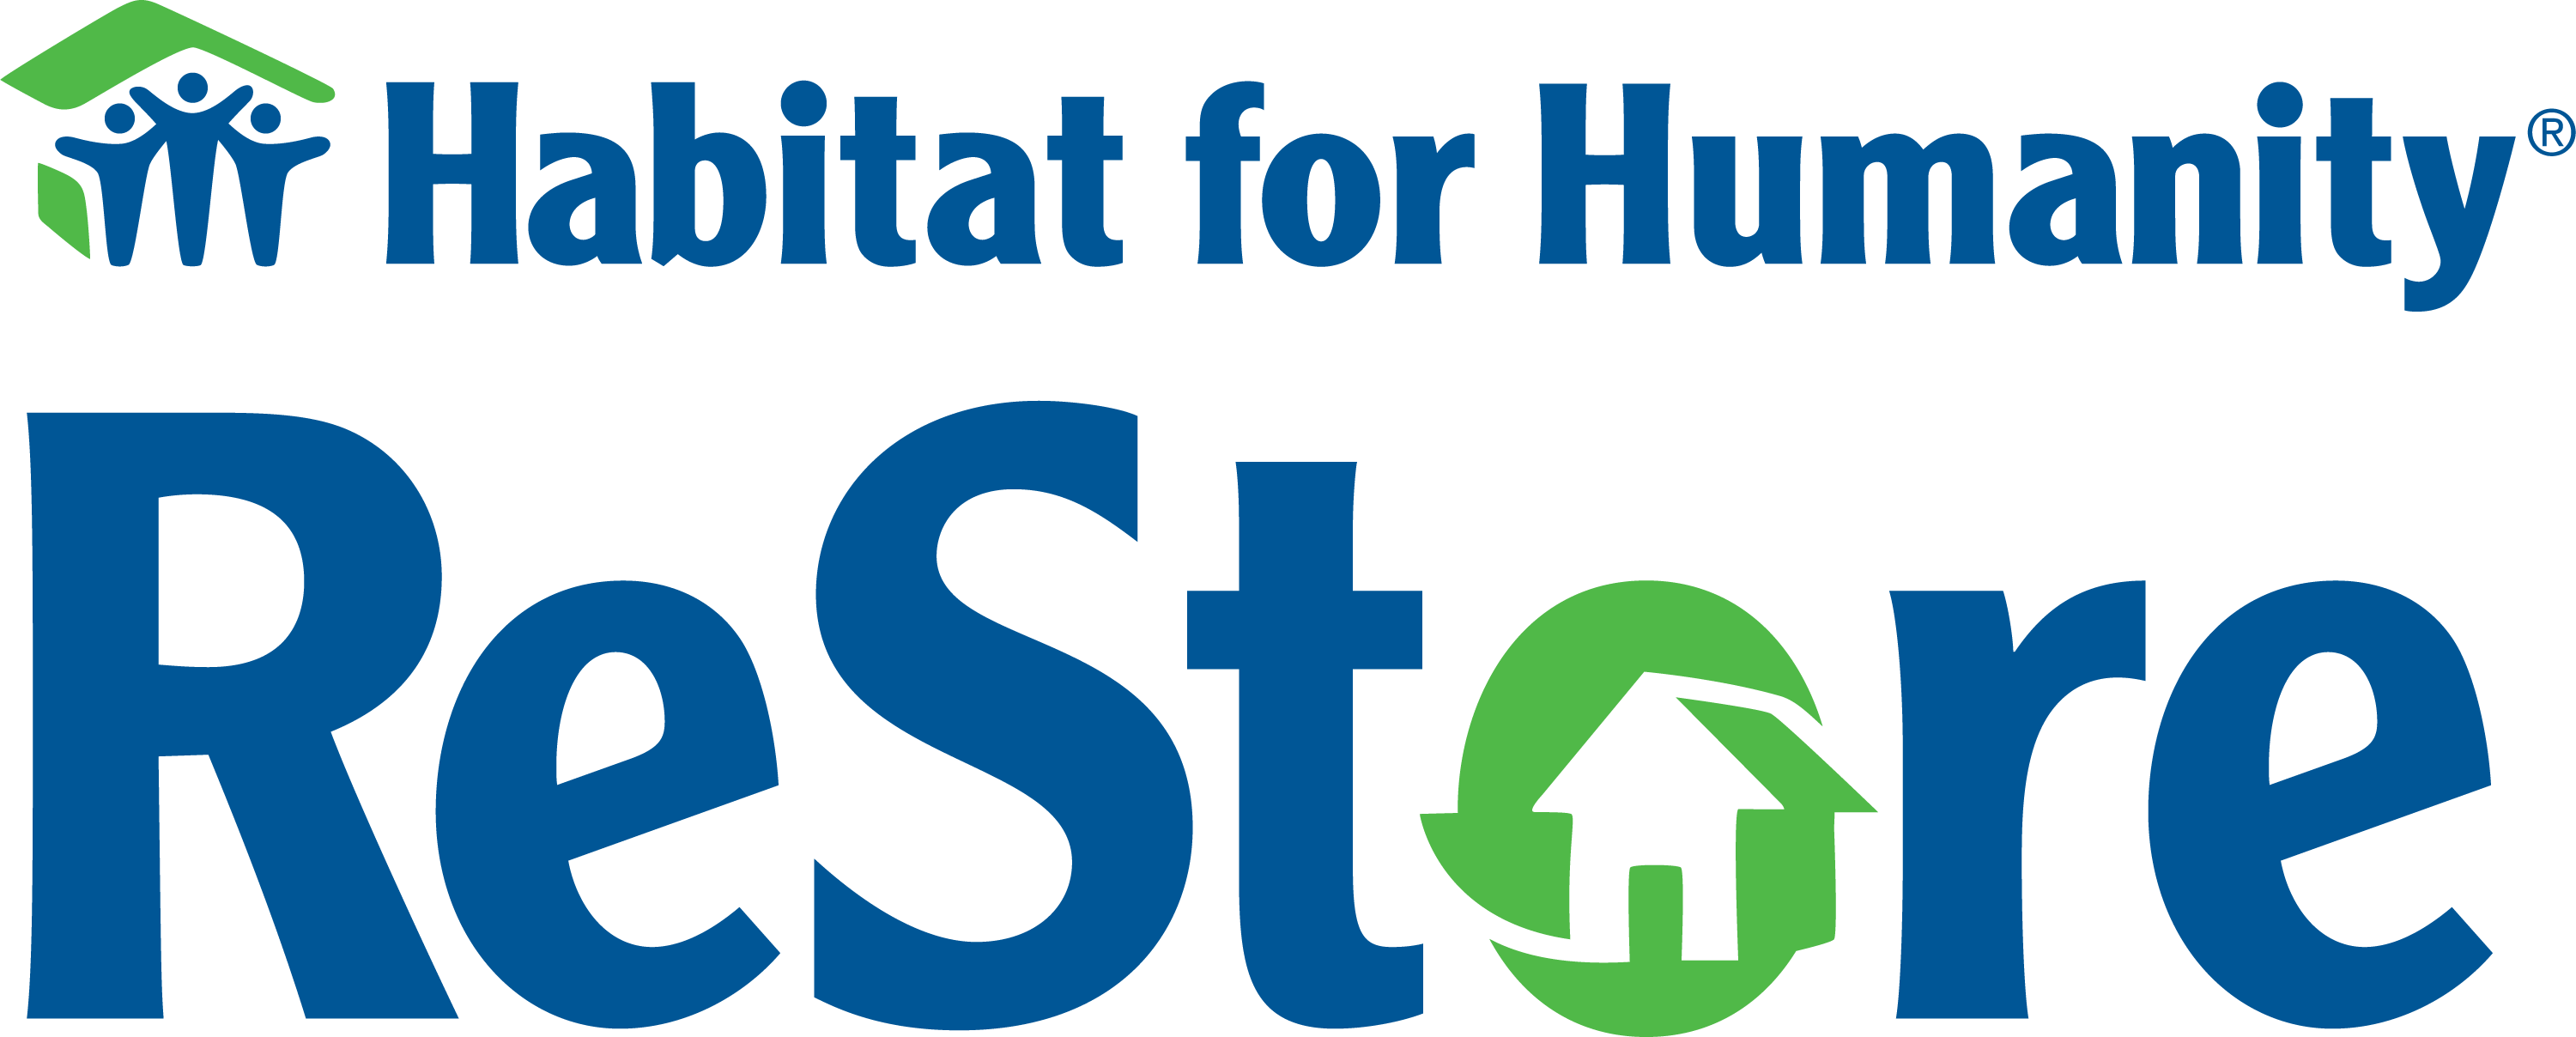 habitat_for_humanity_restore